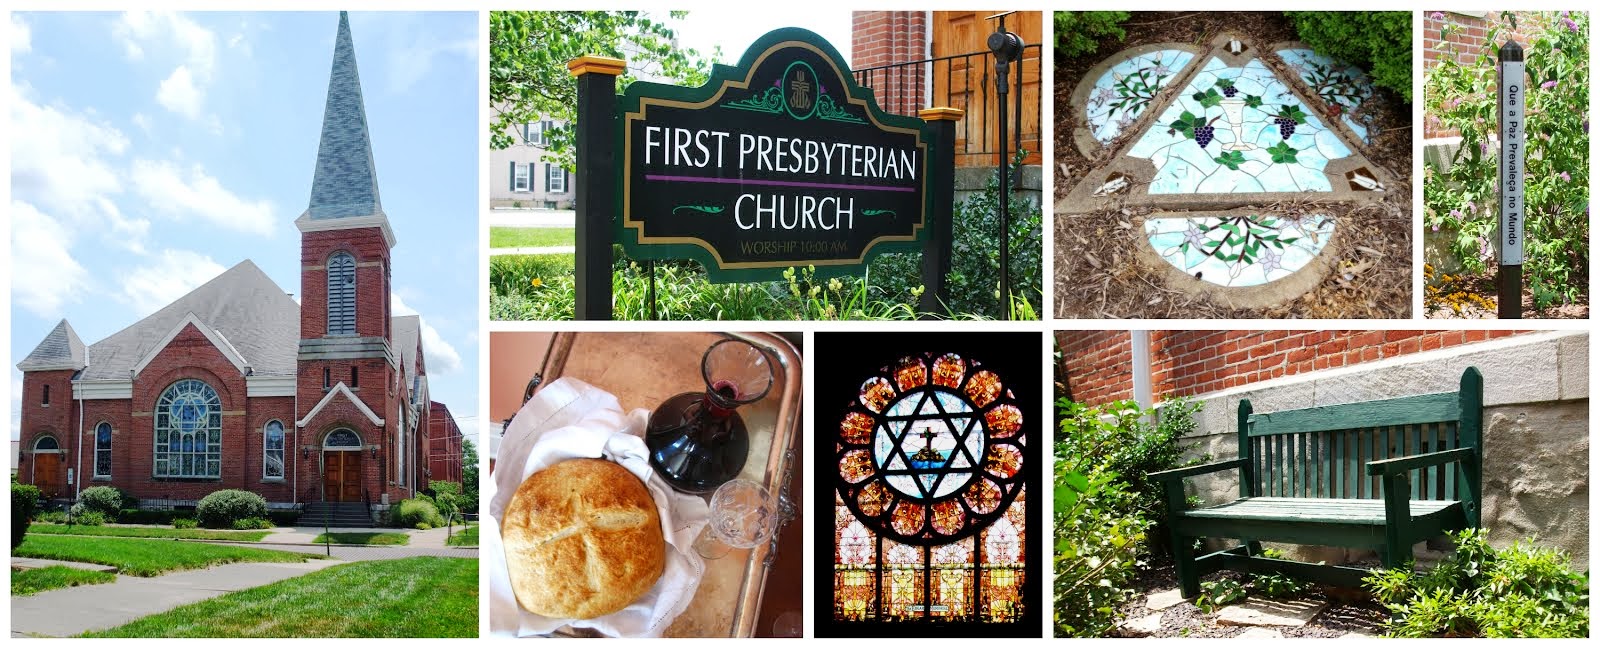 First Presbyterian Church of Lincoln, Illinois